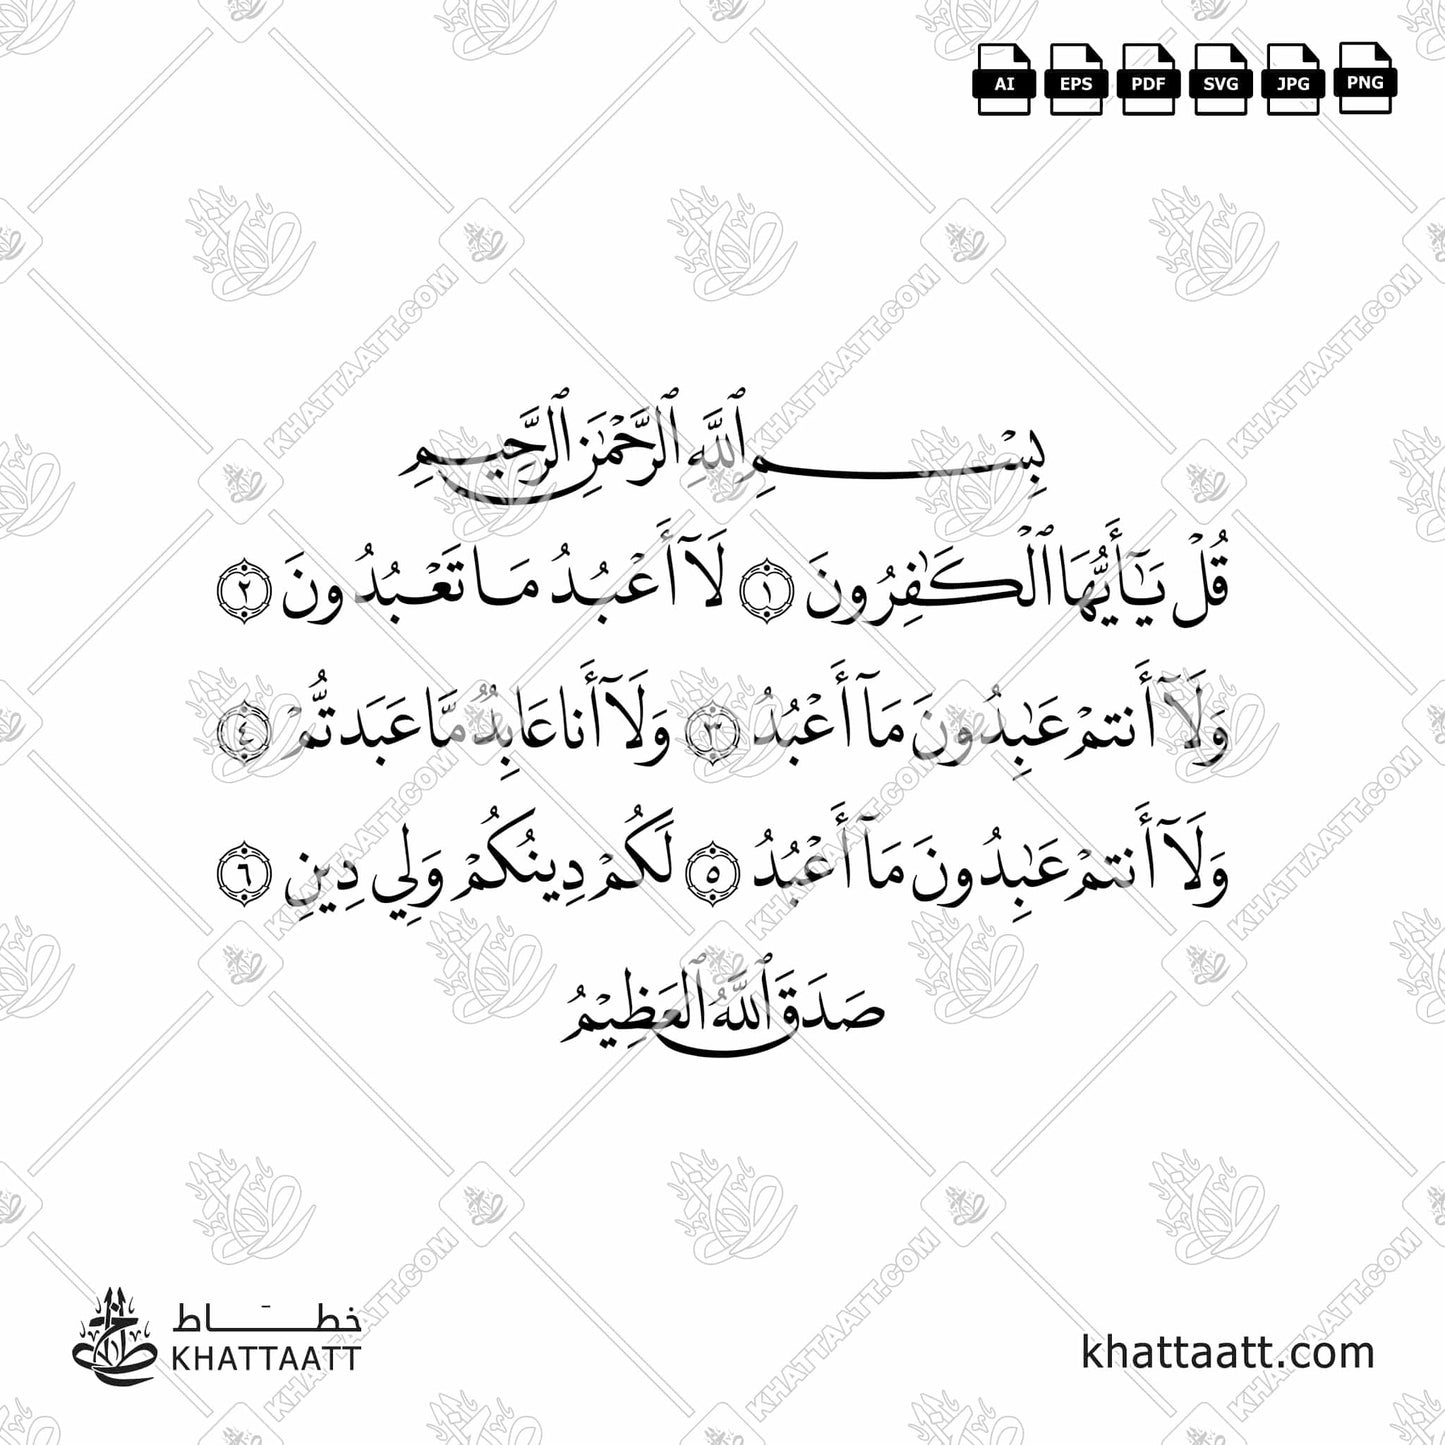 Download Arabic calligraphy تحميل مخطوطة خط عربي of Surat Al-Kafirun - سورة الكافرون (N011) Naskh - خط النسخ in vector فيكتور and png